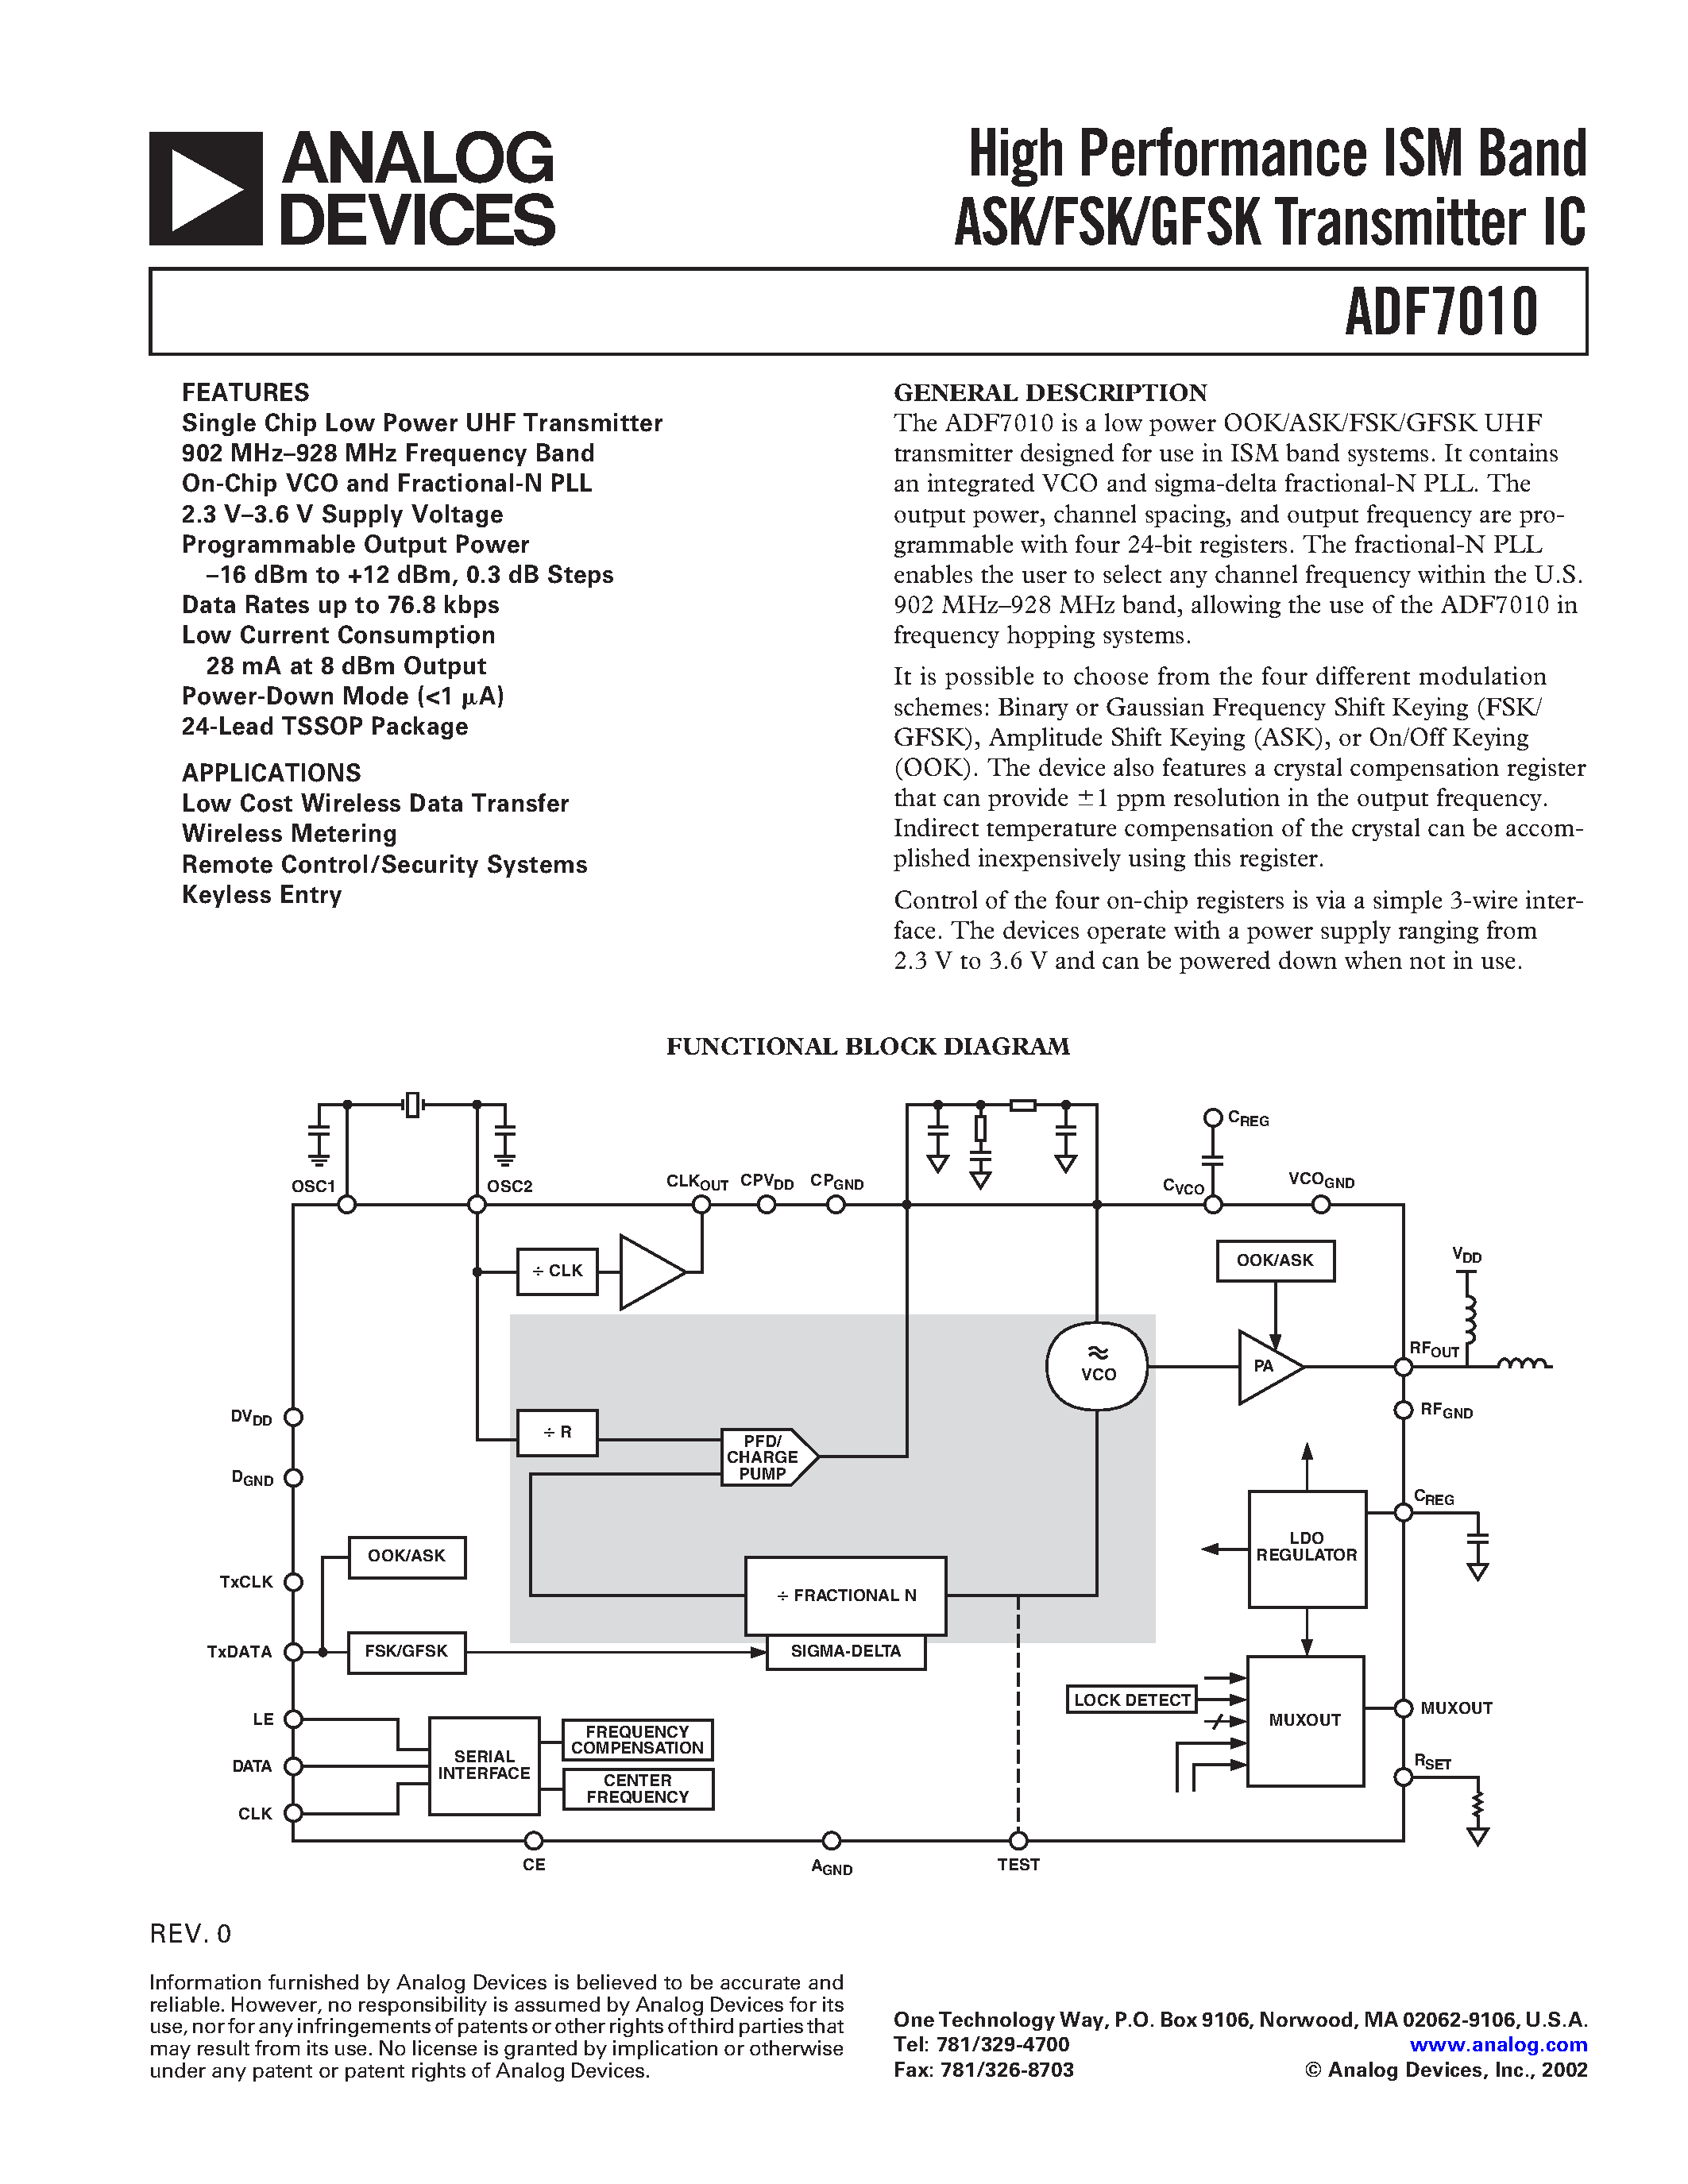 Даташит ADF7010BRU - High Performance ISM Band ASK/FSK/GFSK Transmitter IC страница 1